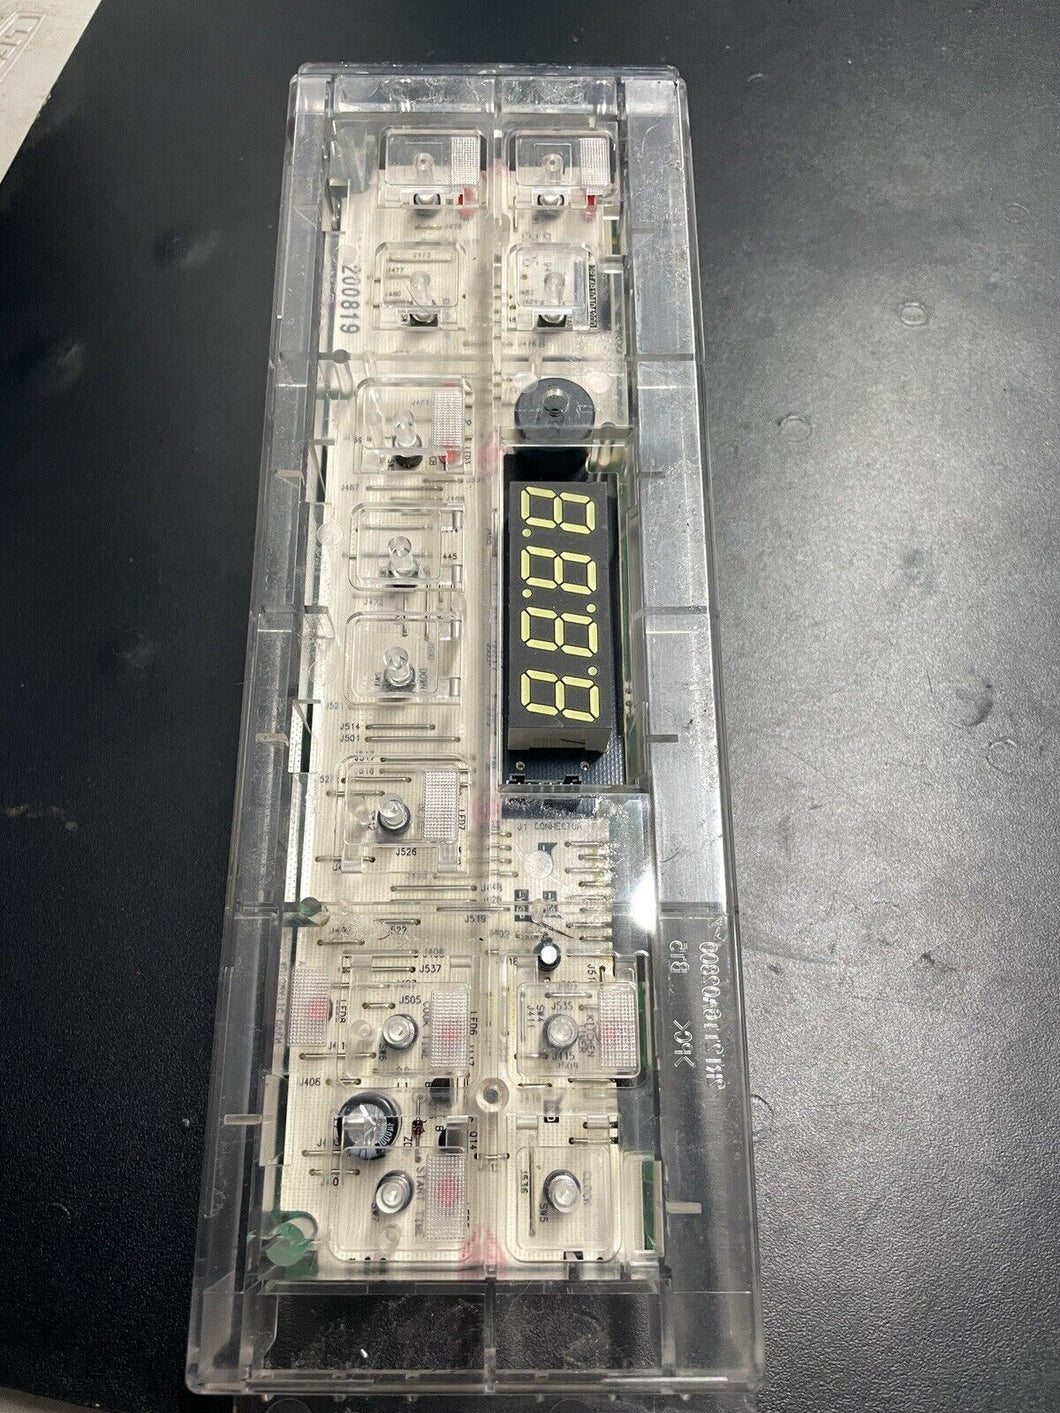 164D8450G175 GE Range Control Board |WM1312